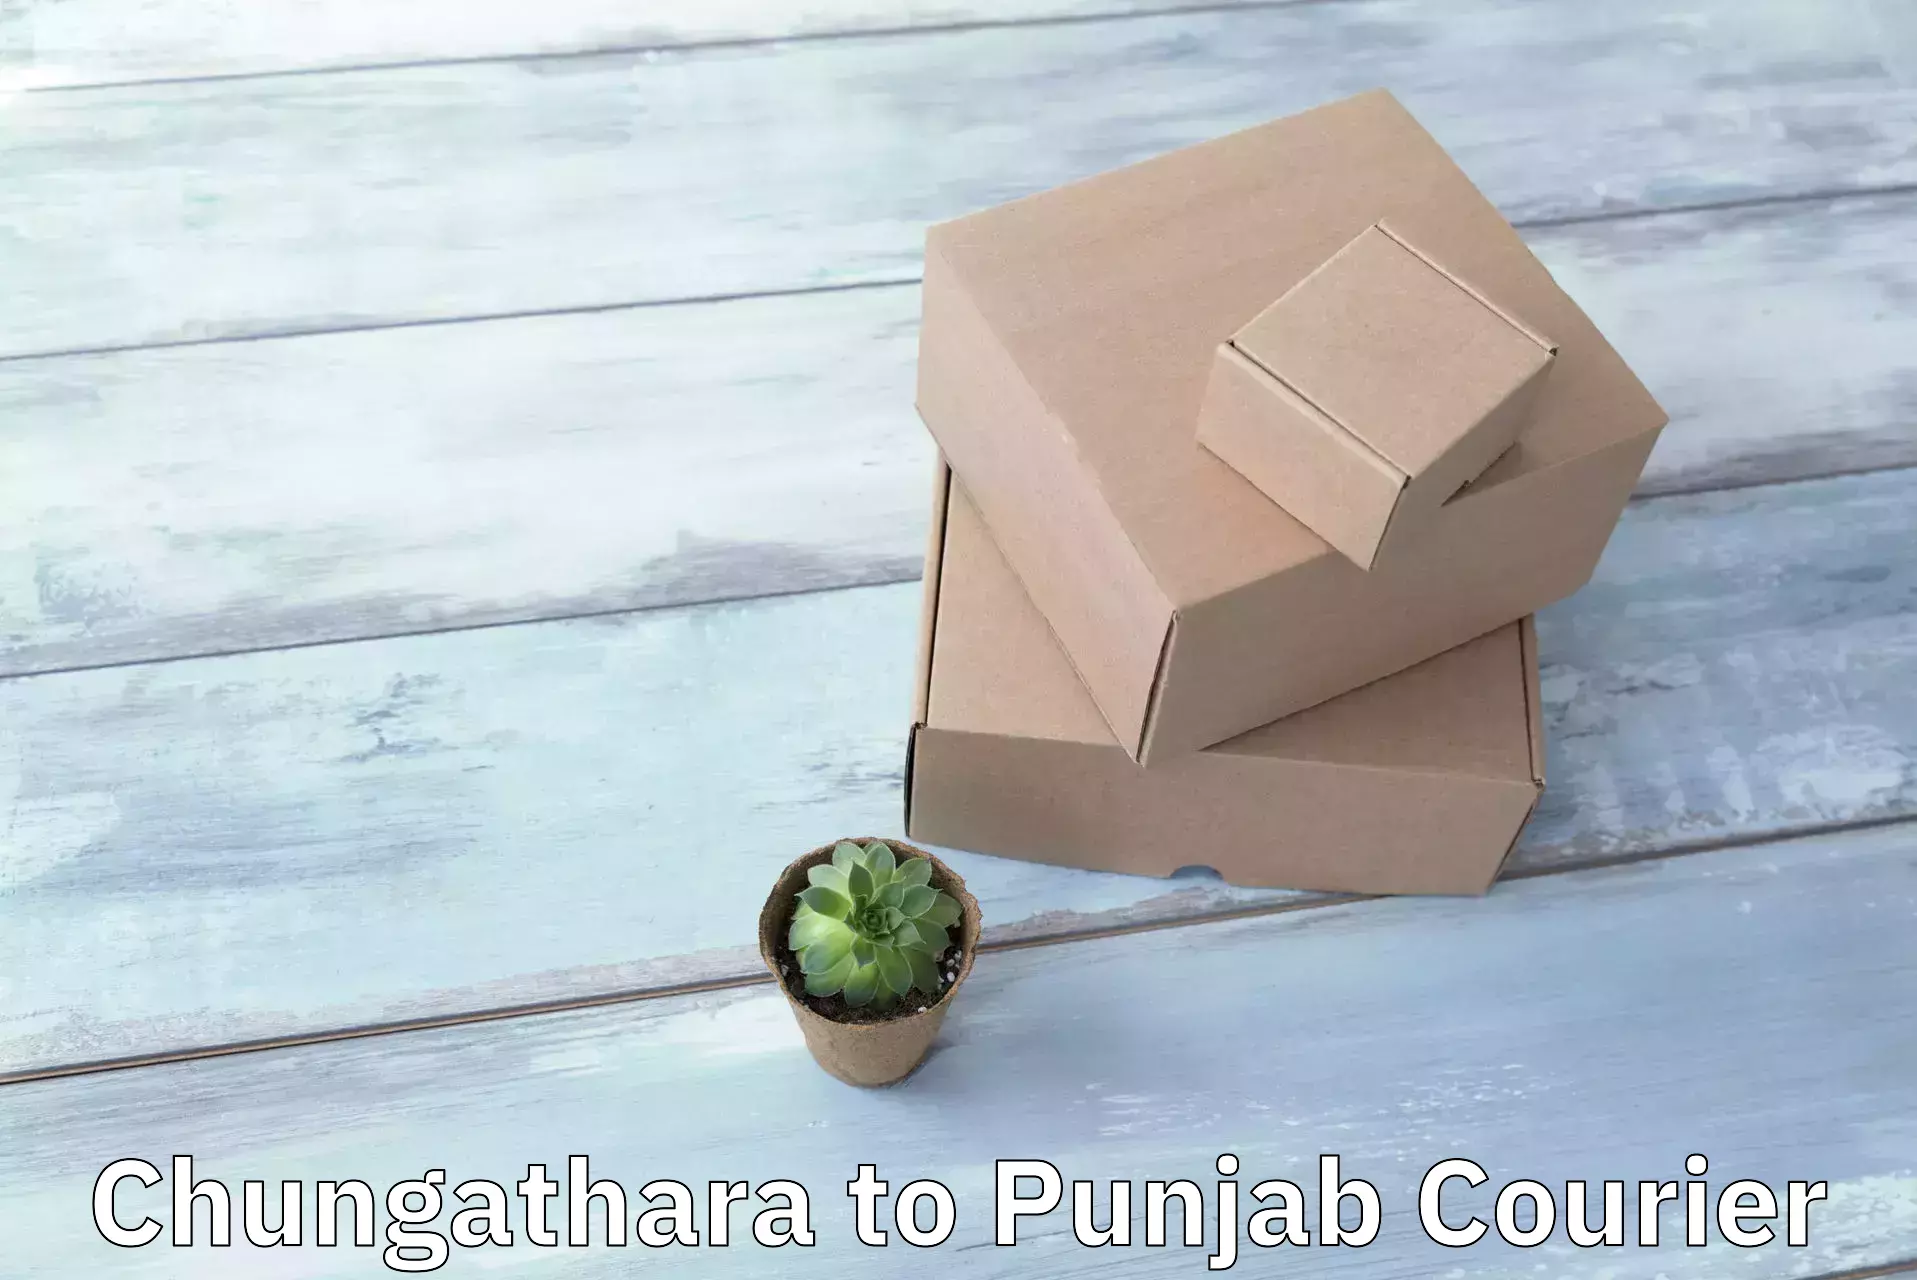 Affordable parcel service Chungathara to Zirakpur